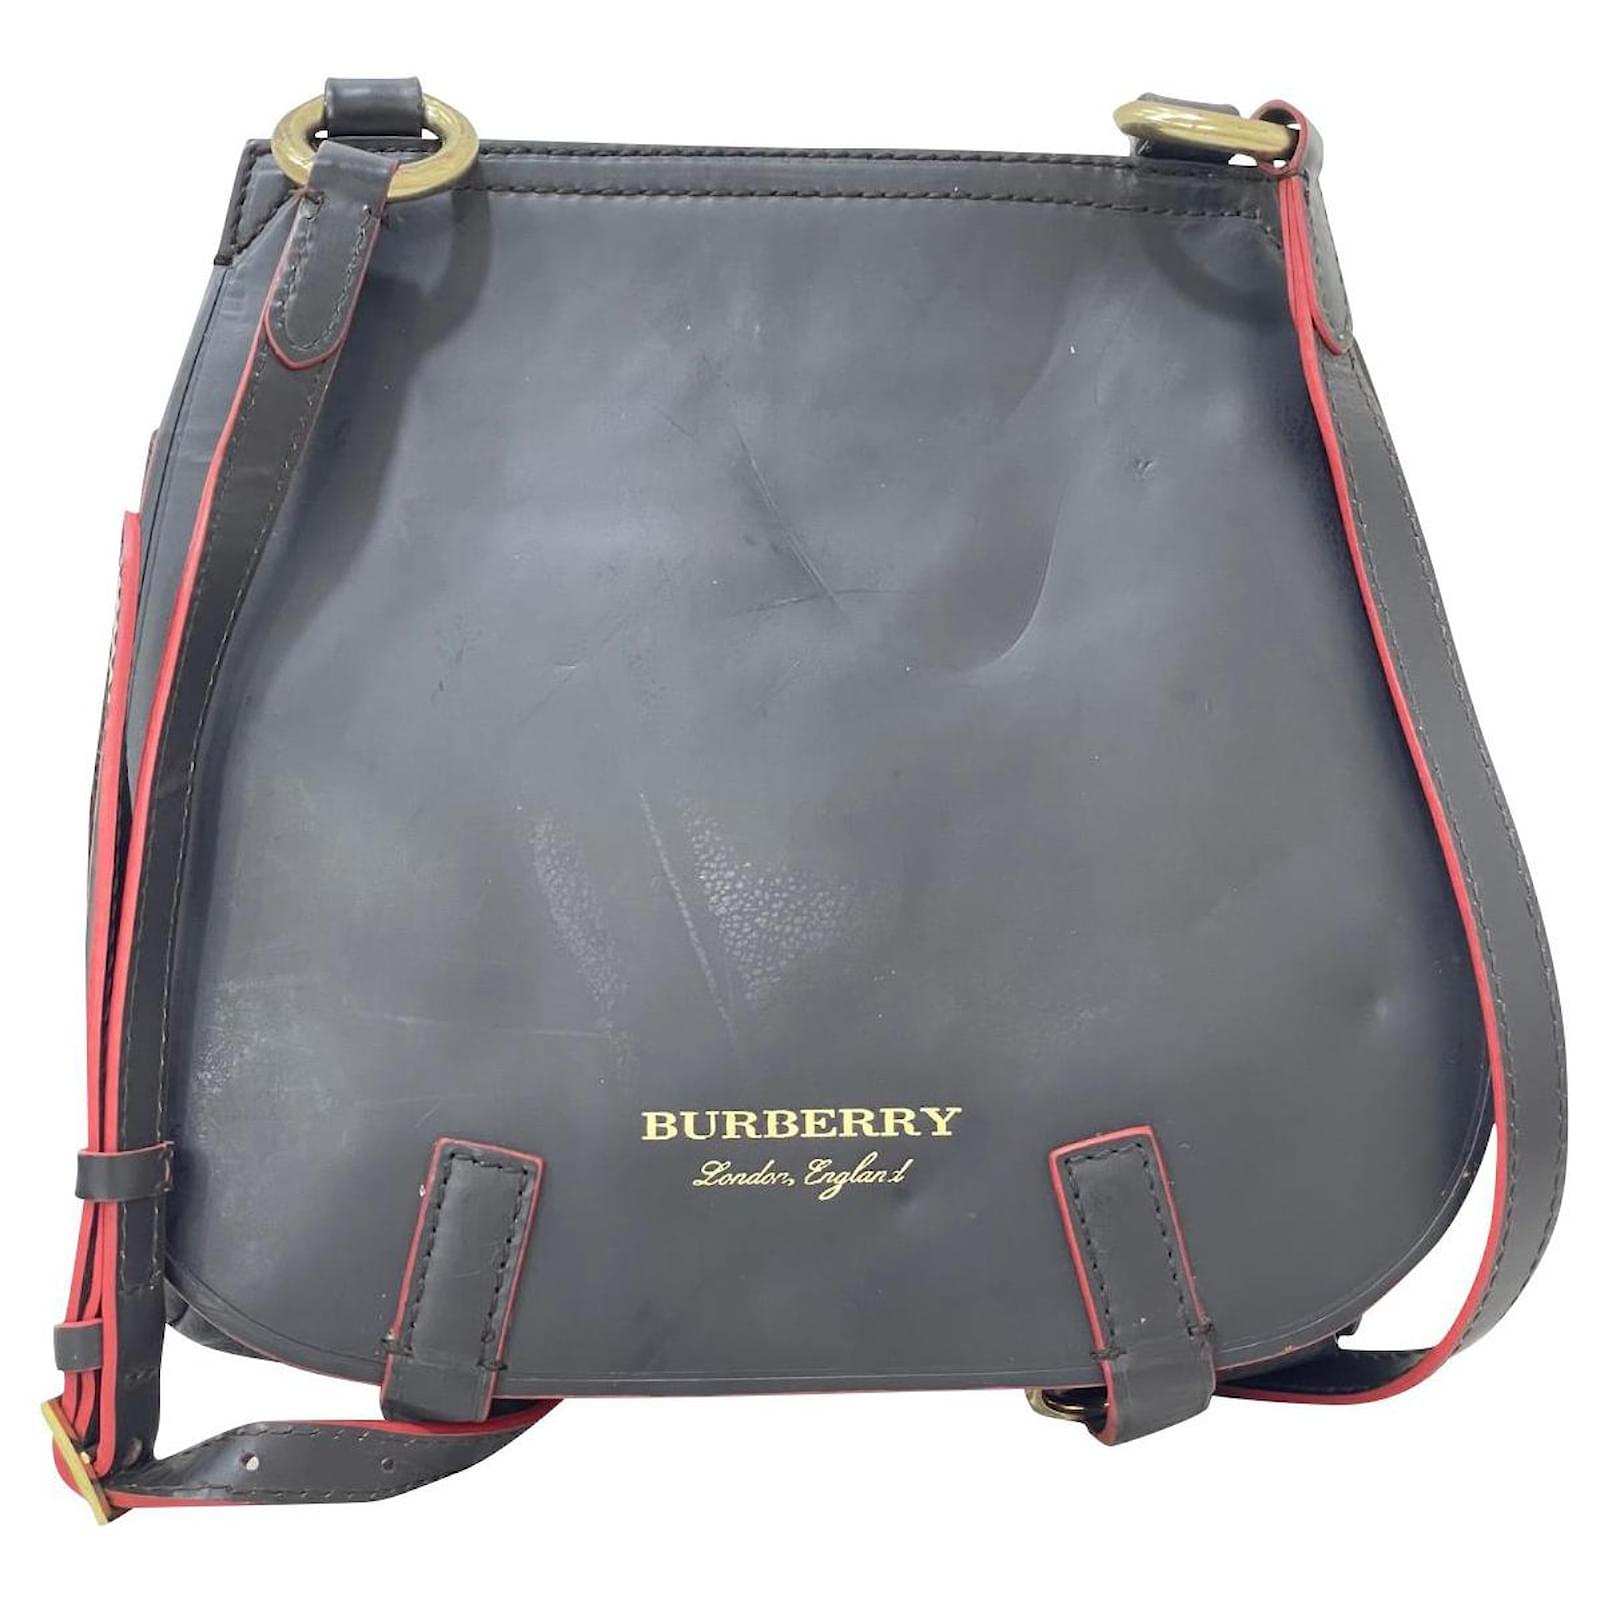 burberry bridle bag